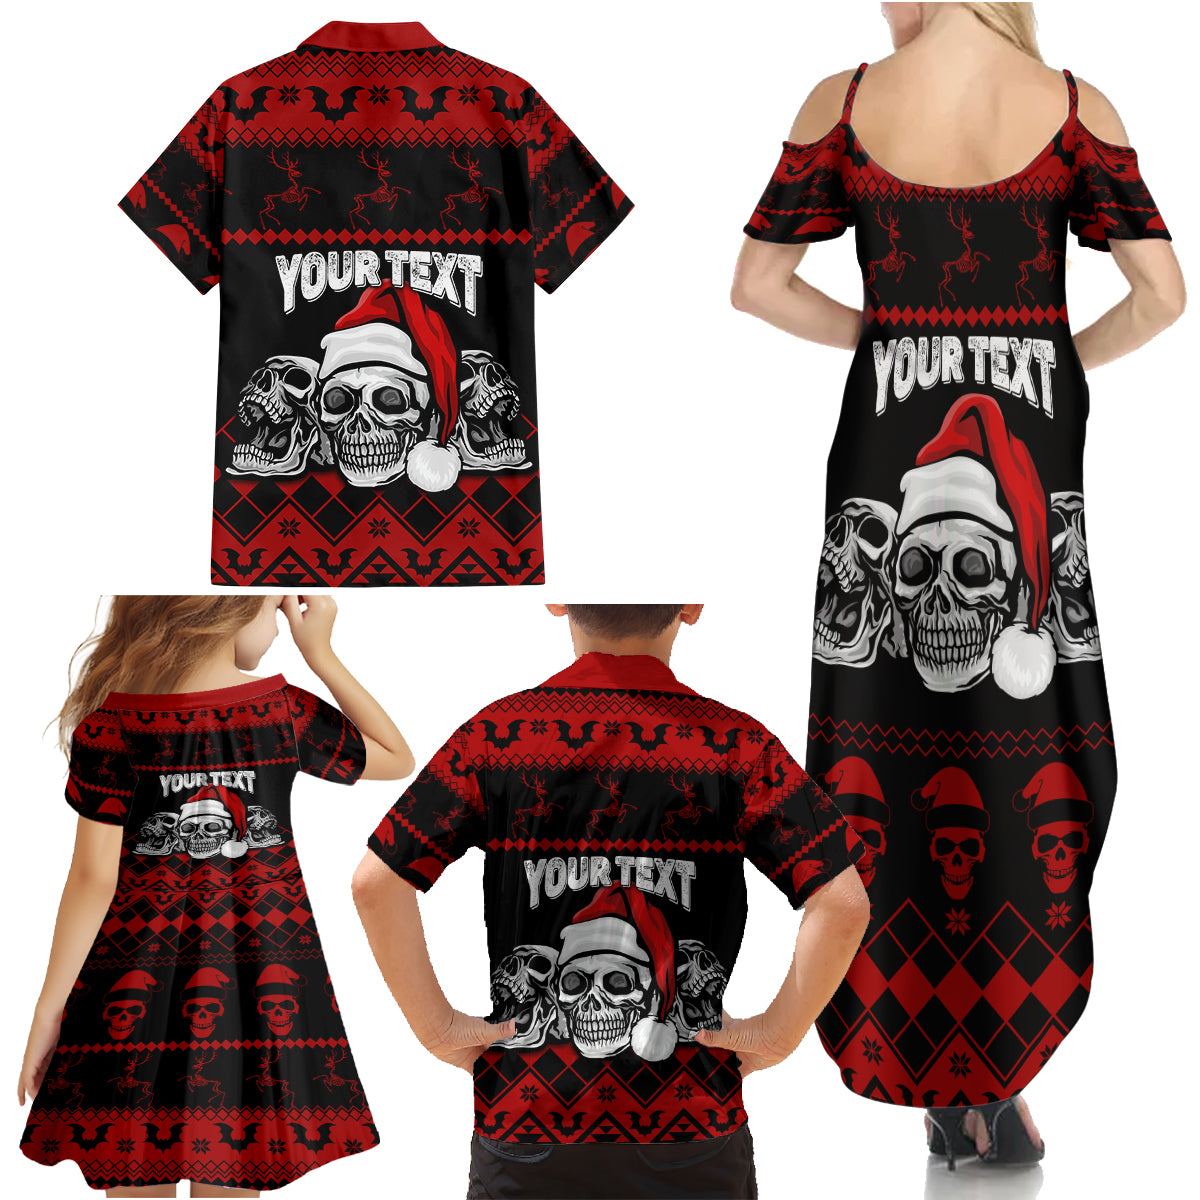 custom-christmas-family-matching-summer-maxi-dress-and-hawaiian-shirt-gothic-skull-creepmas